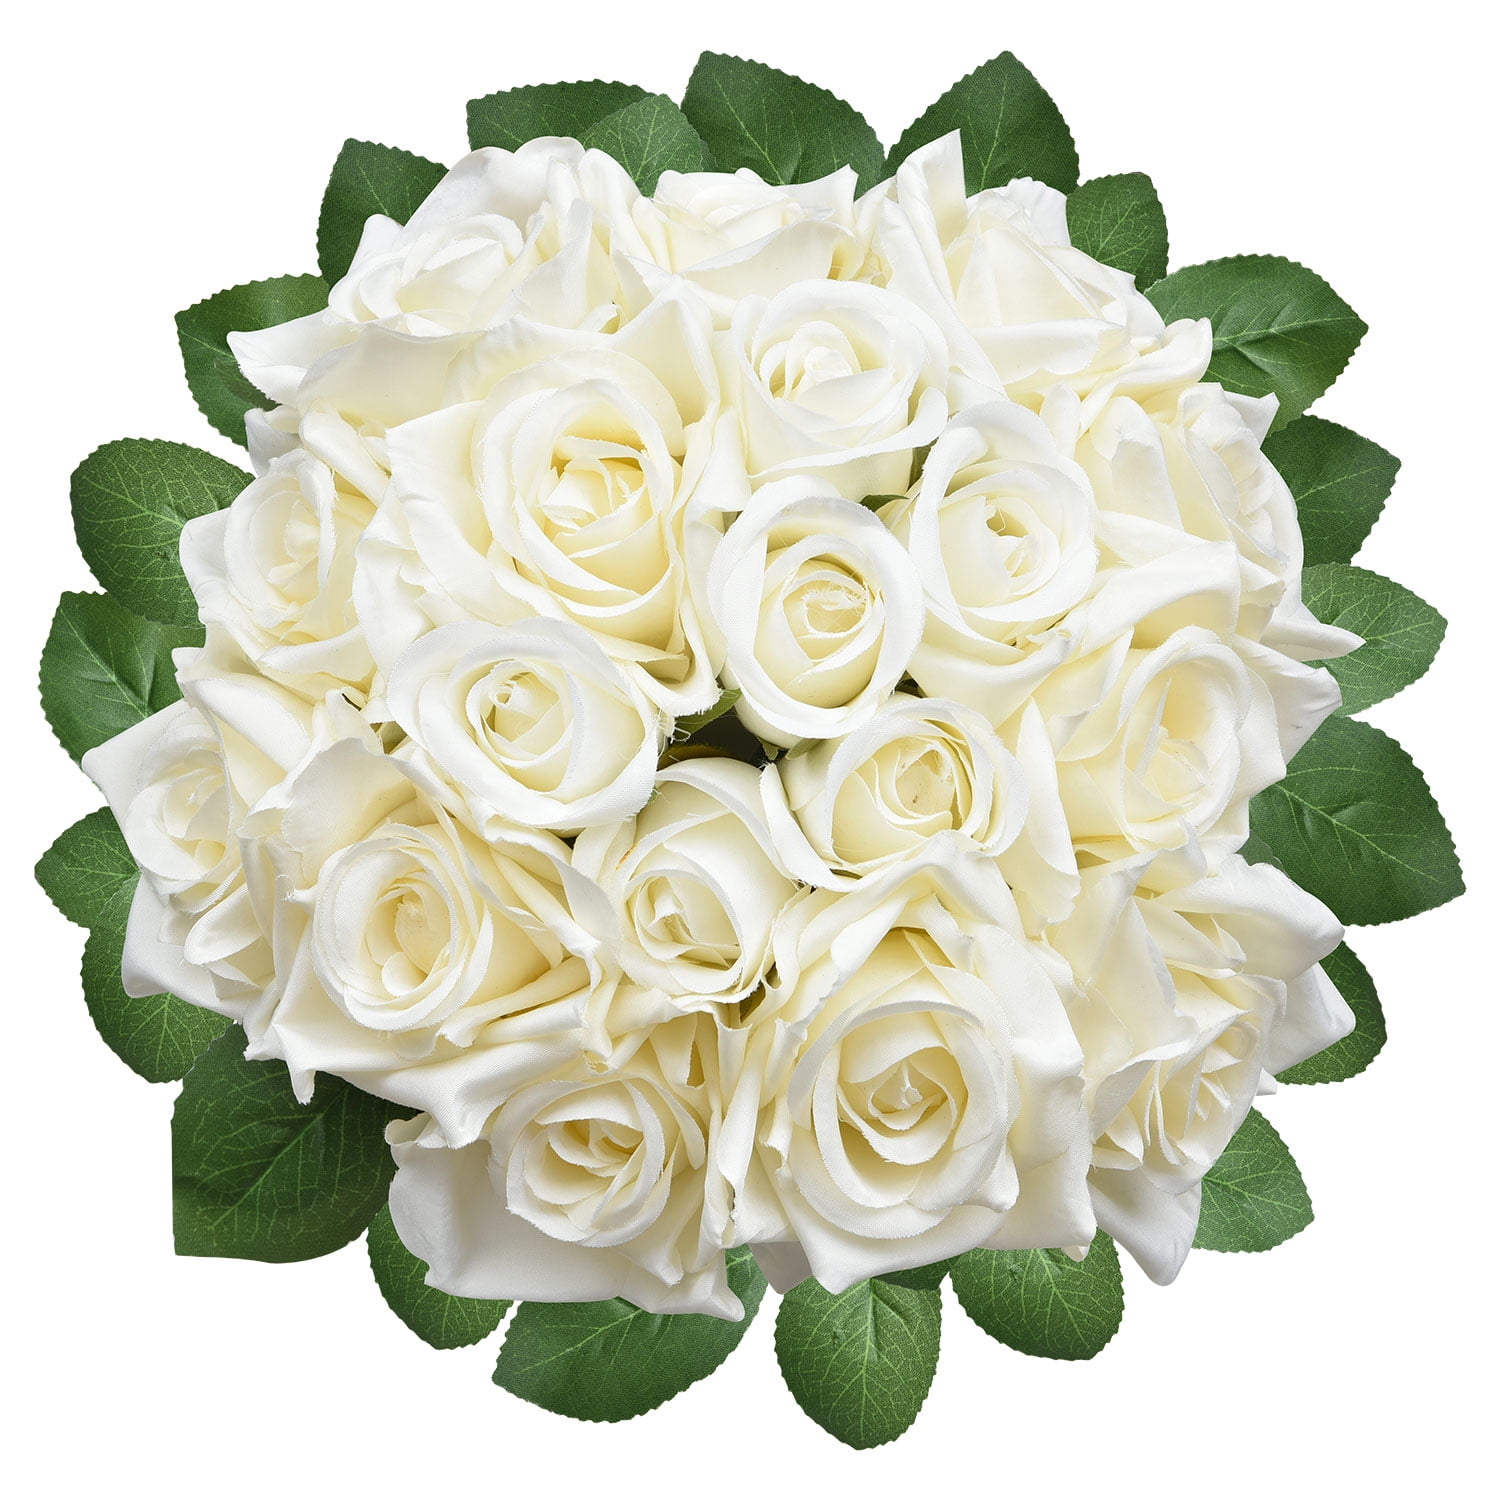 21 Head Artificial Rose Silk Flower Leaf Bouquet Home Wedding Party Floral Decor 